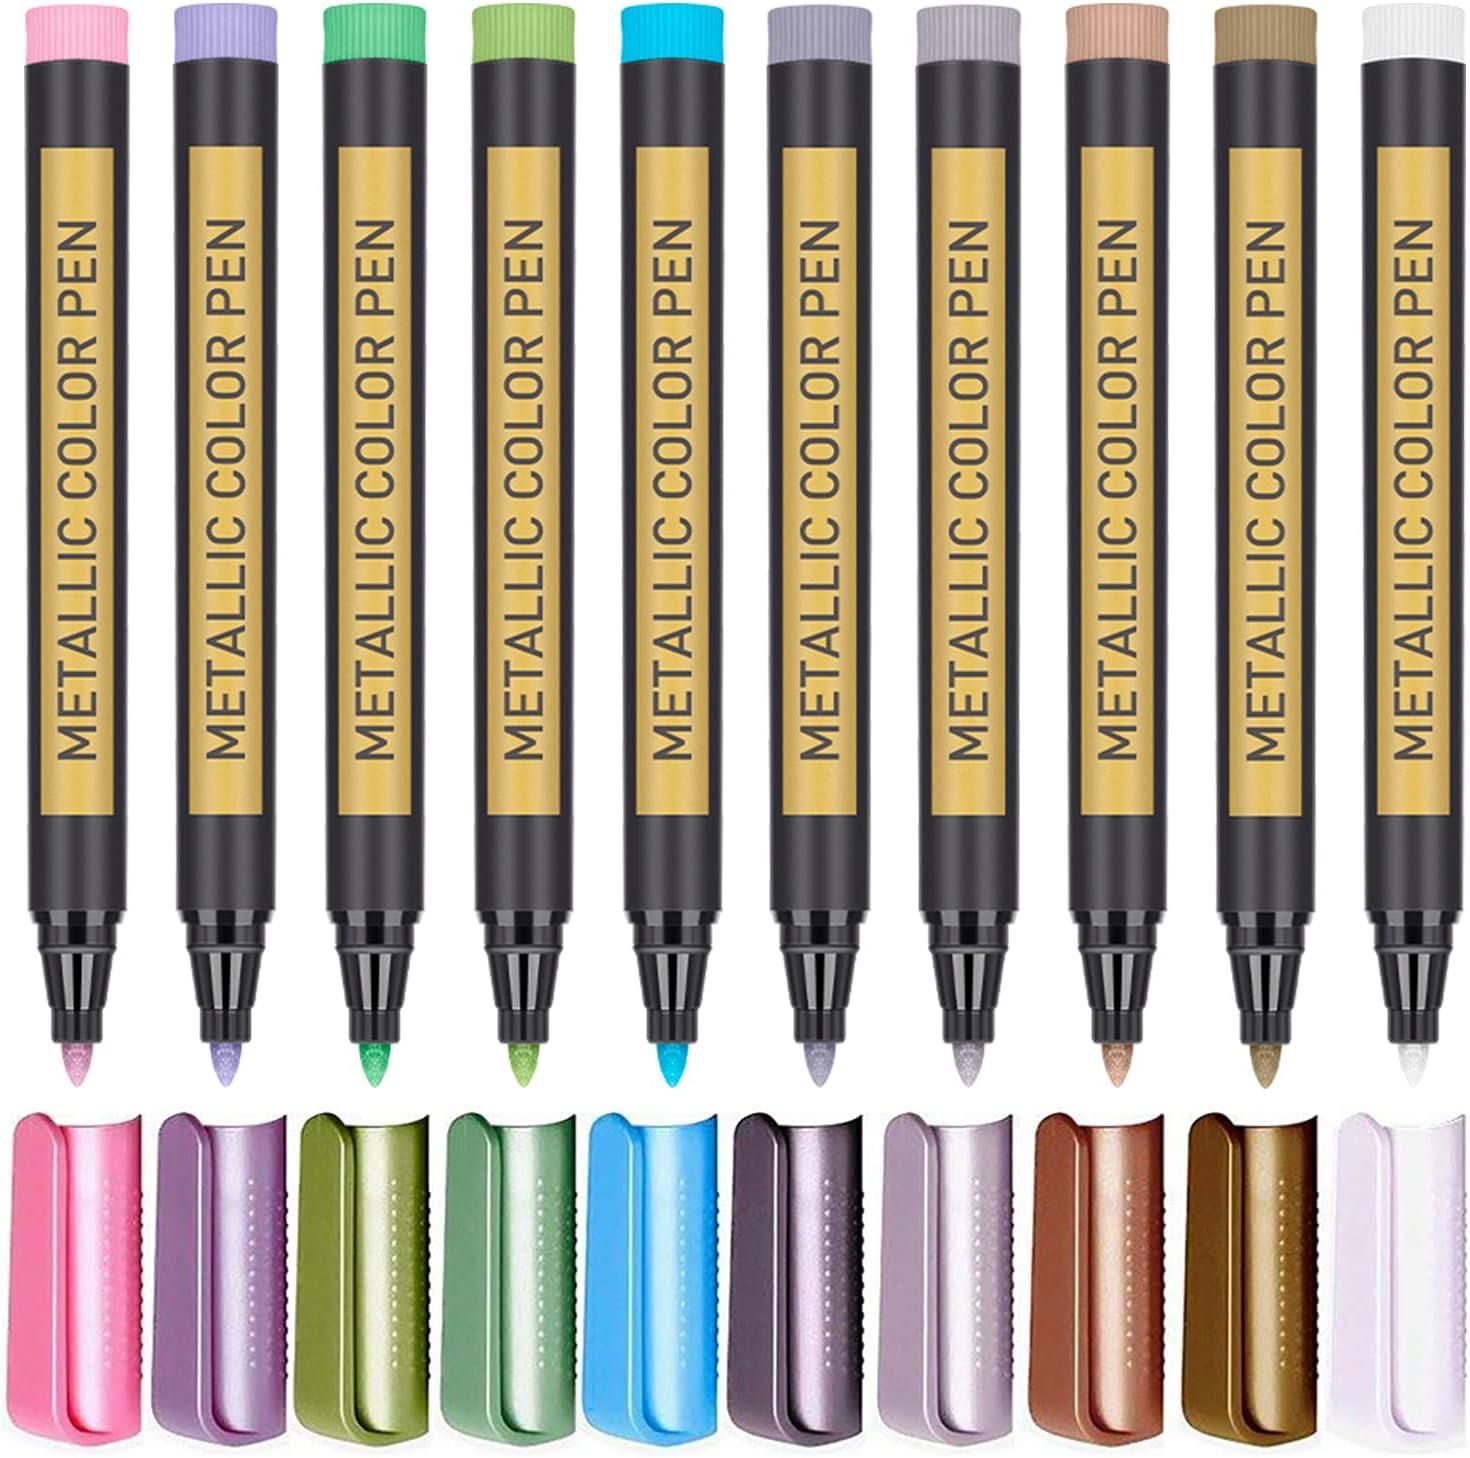 WALFRONT New 10Pcs Album Photo Premium Metallic Color Marker Pens Assorted  Colors Paint Pen for Colorful Ink DIY Scrapbook Card Making , Scrapbooking